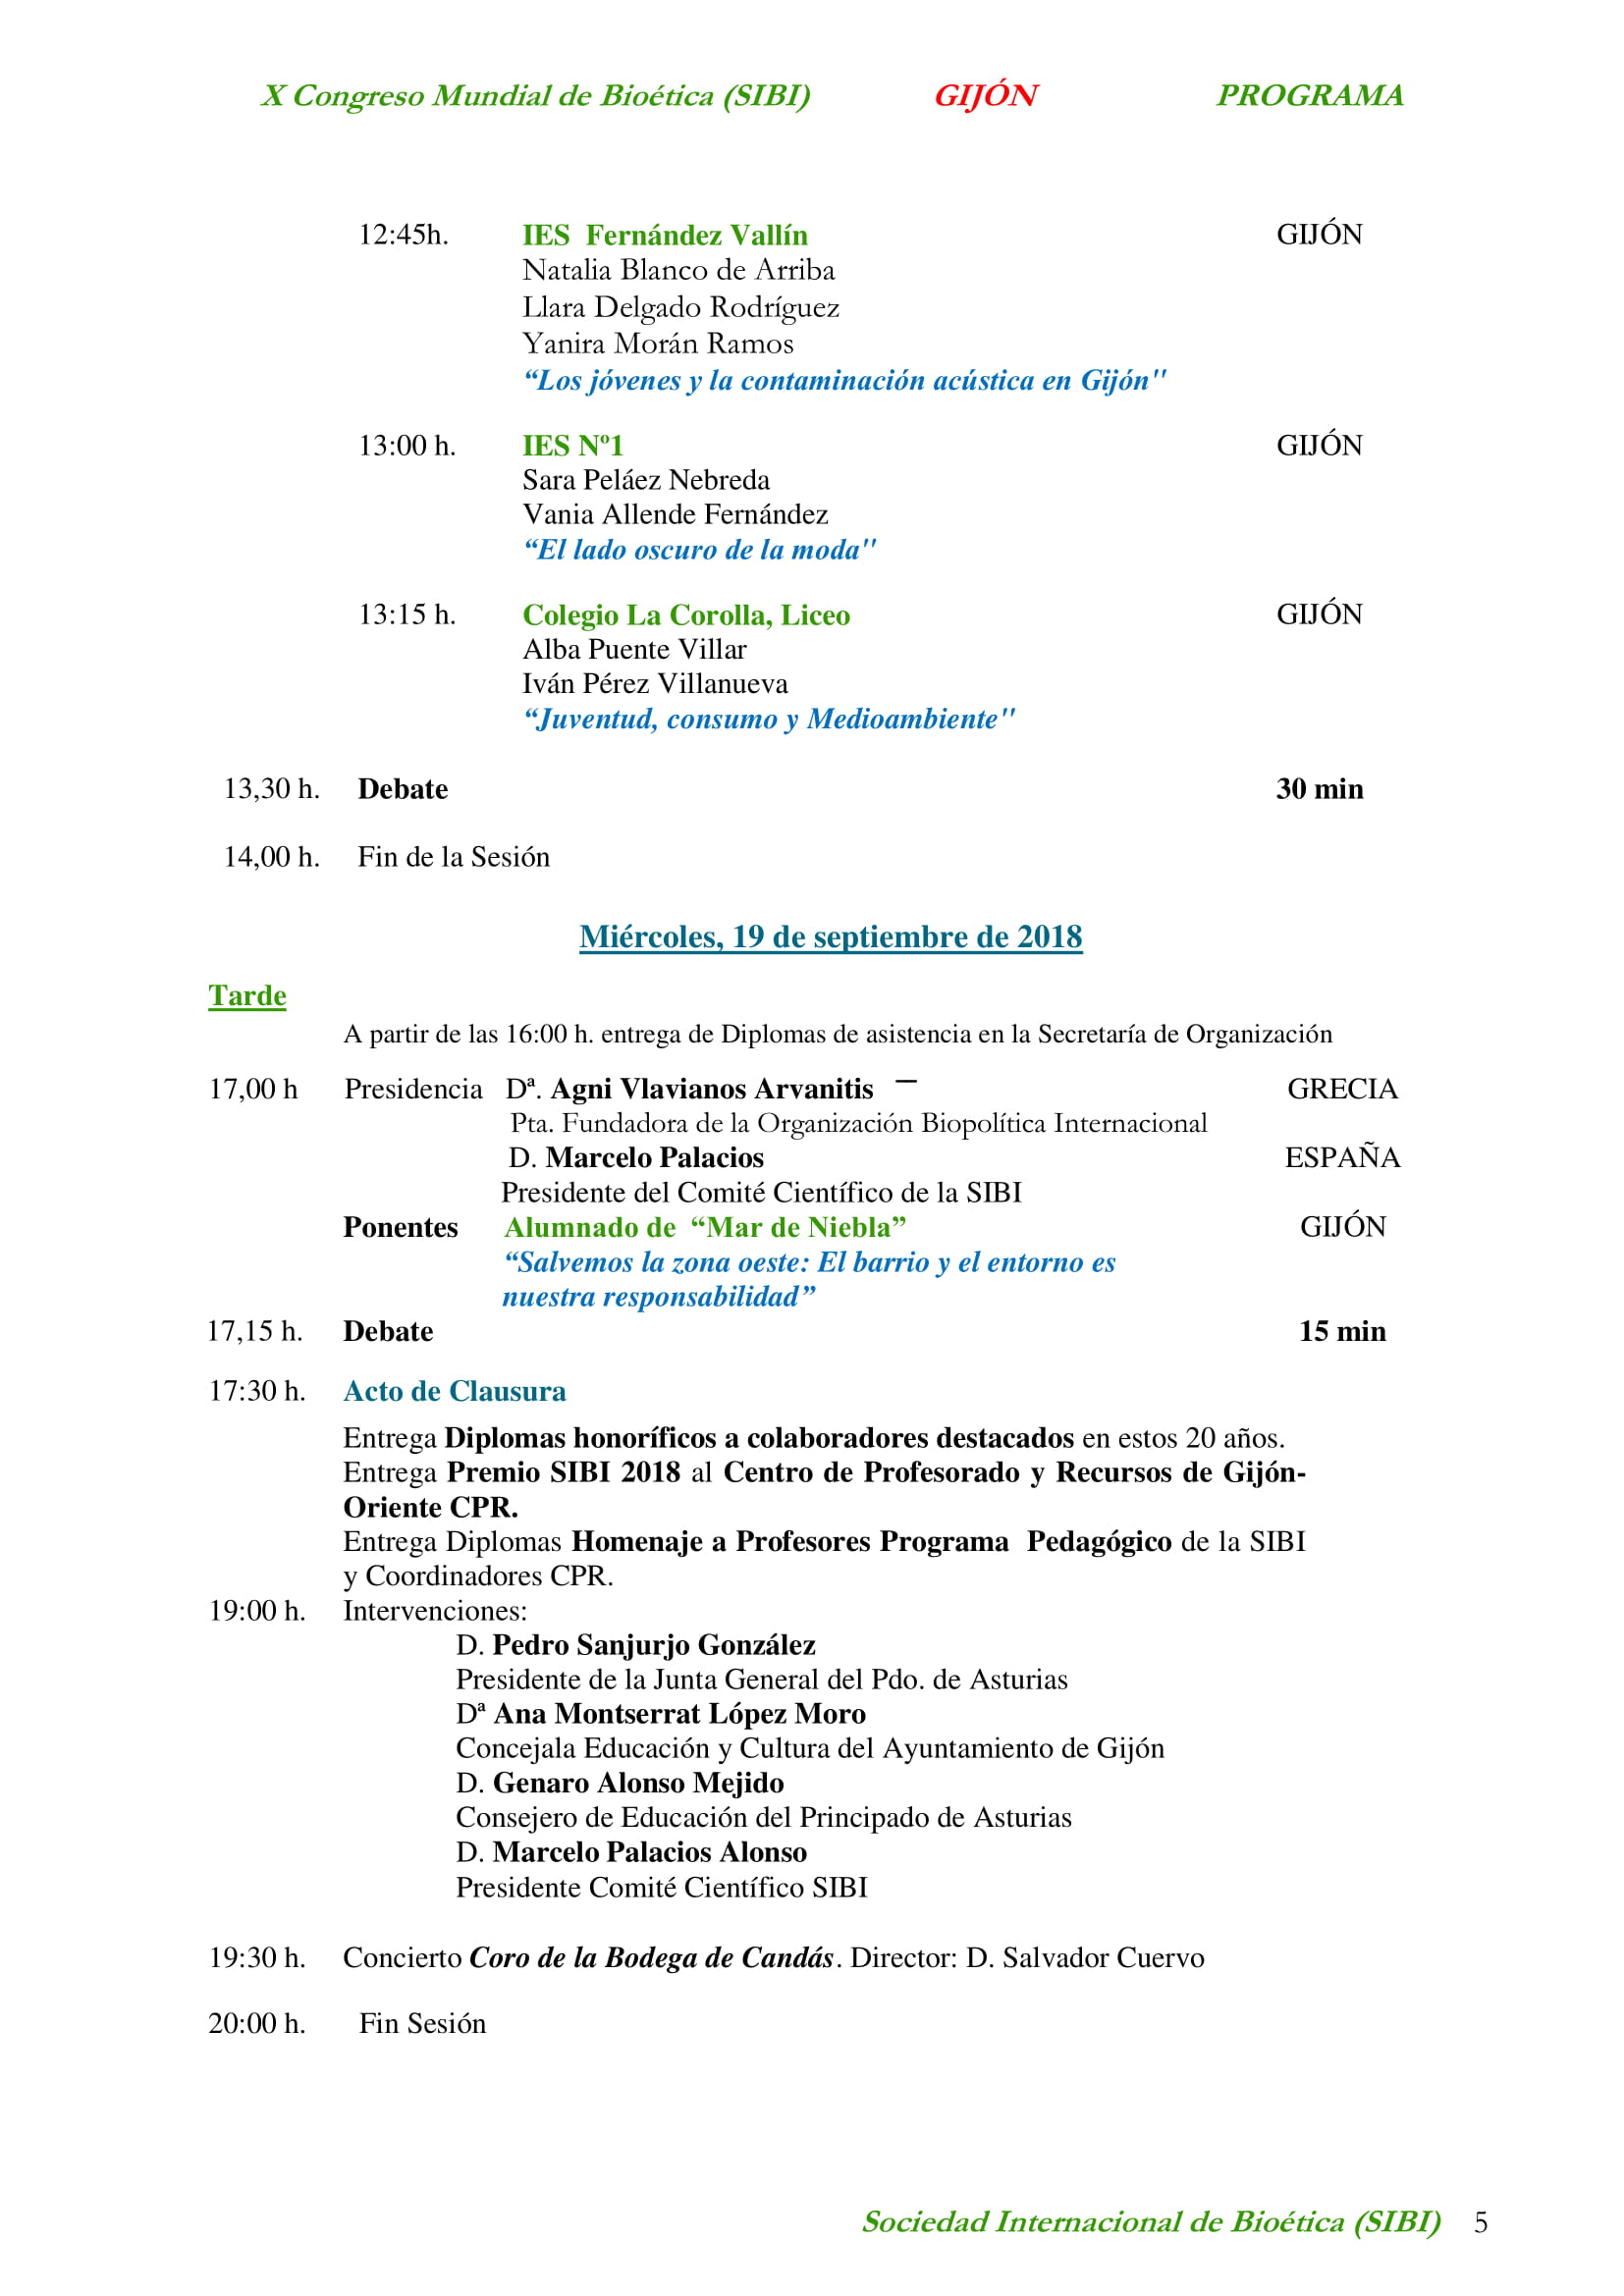 programa X congreso mundial bioetica 2018 pagina 5